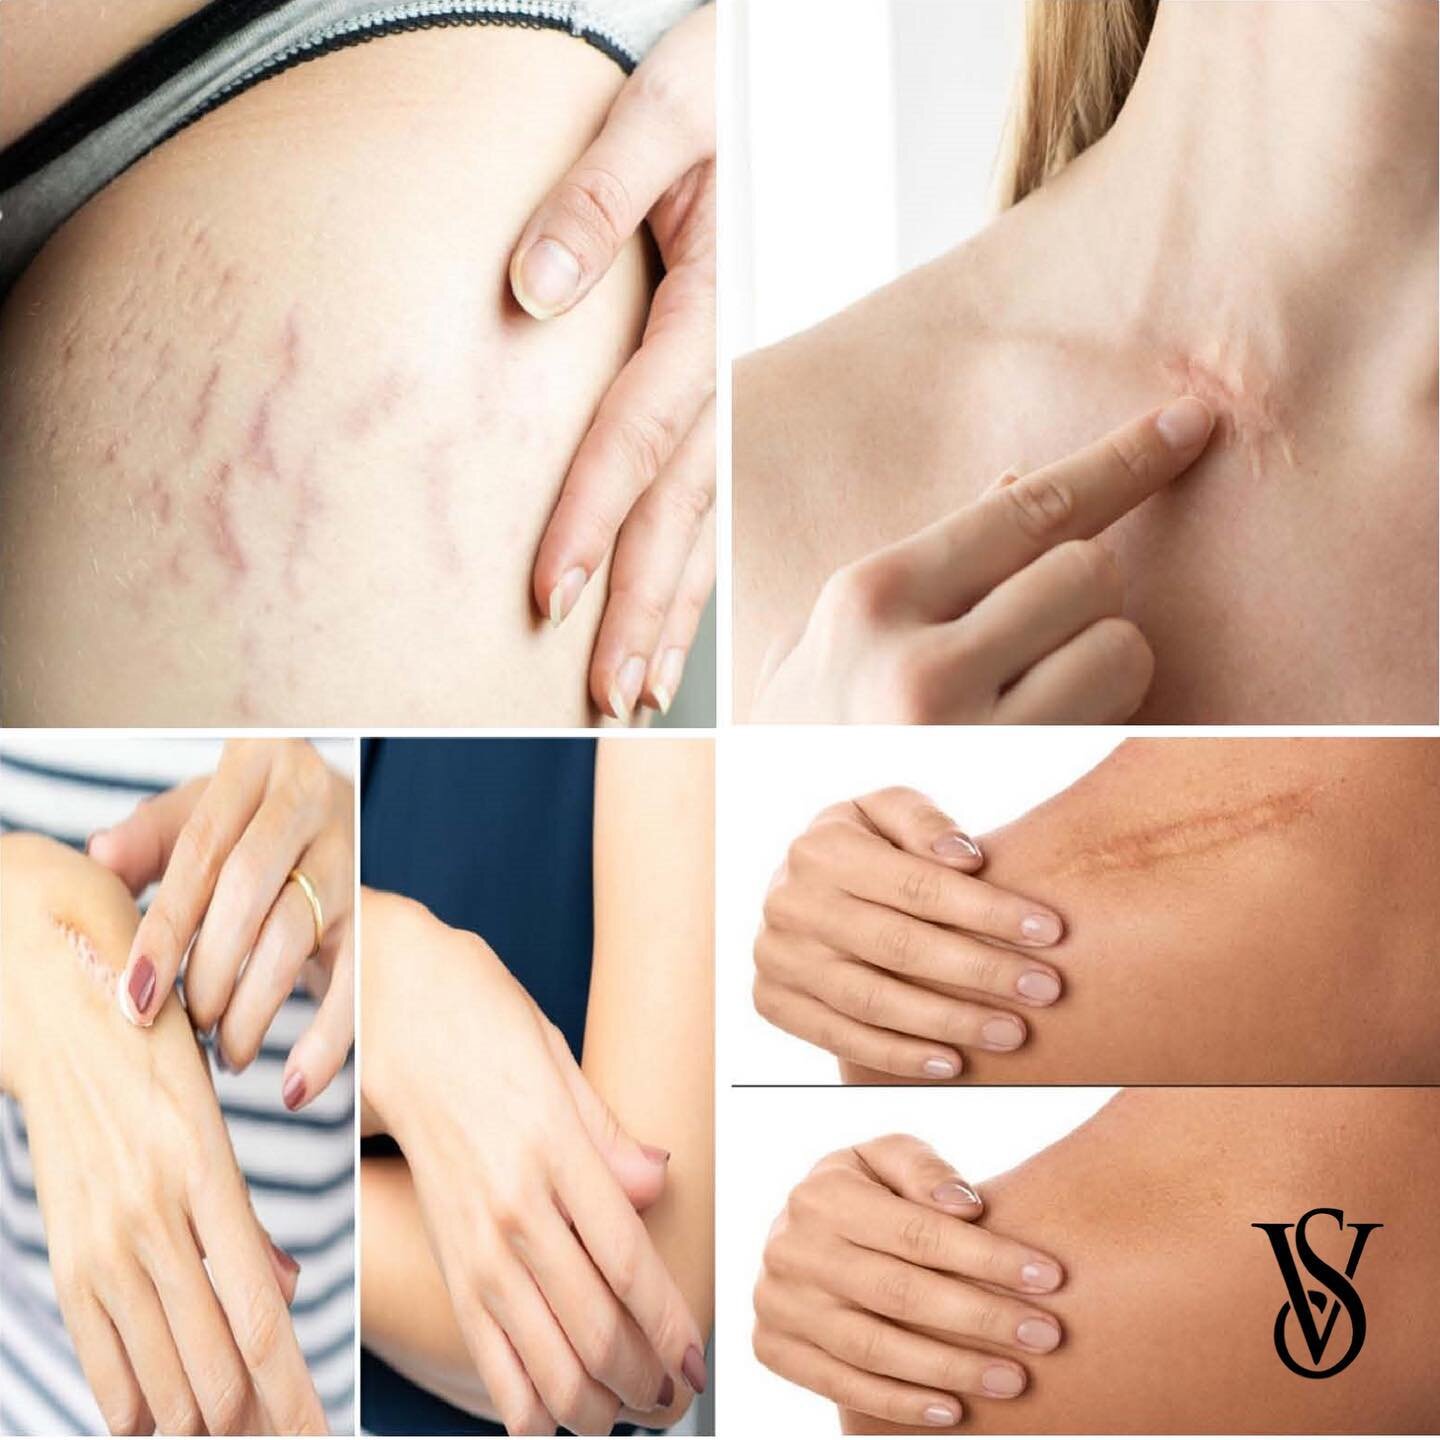 CO2 Laser - Scar Removal, Stretch Marks Removal (skin resurfacing)
👇
BIOK YOUR CONSULTATION!

#co2laser #skinresurfacing #skinrejuvenation #agelessbyabovian